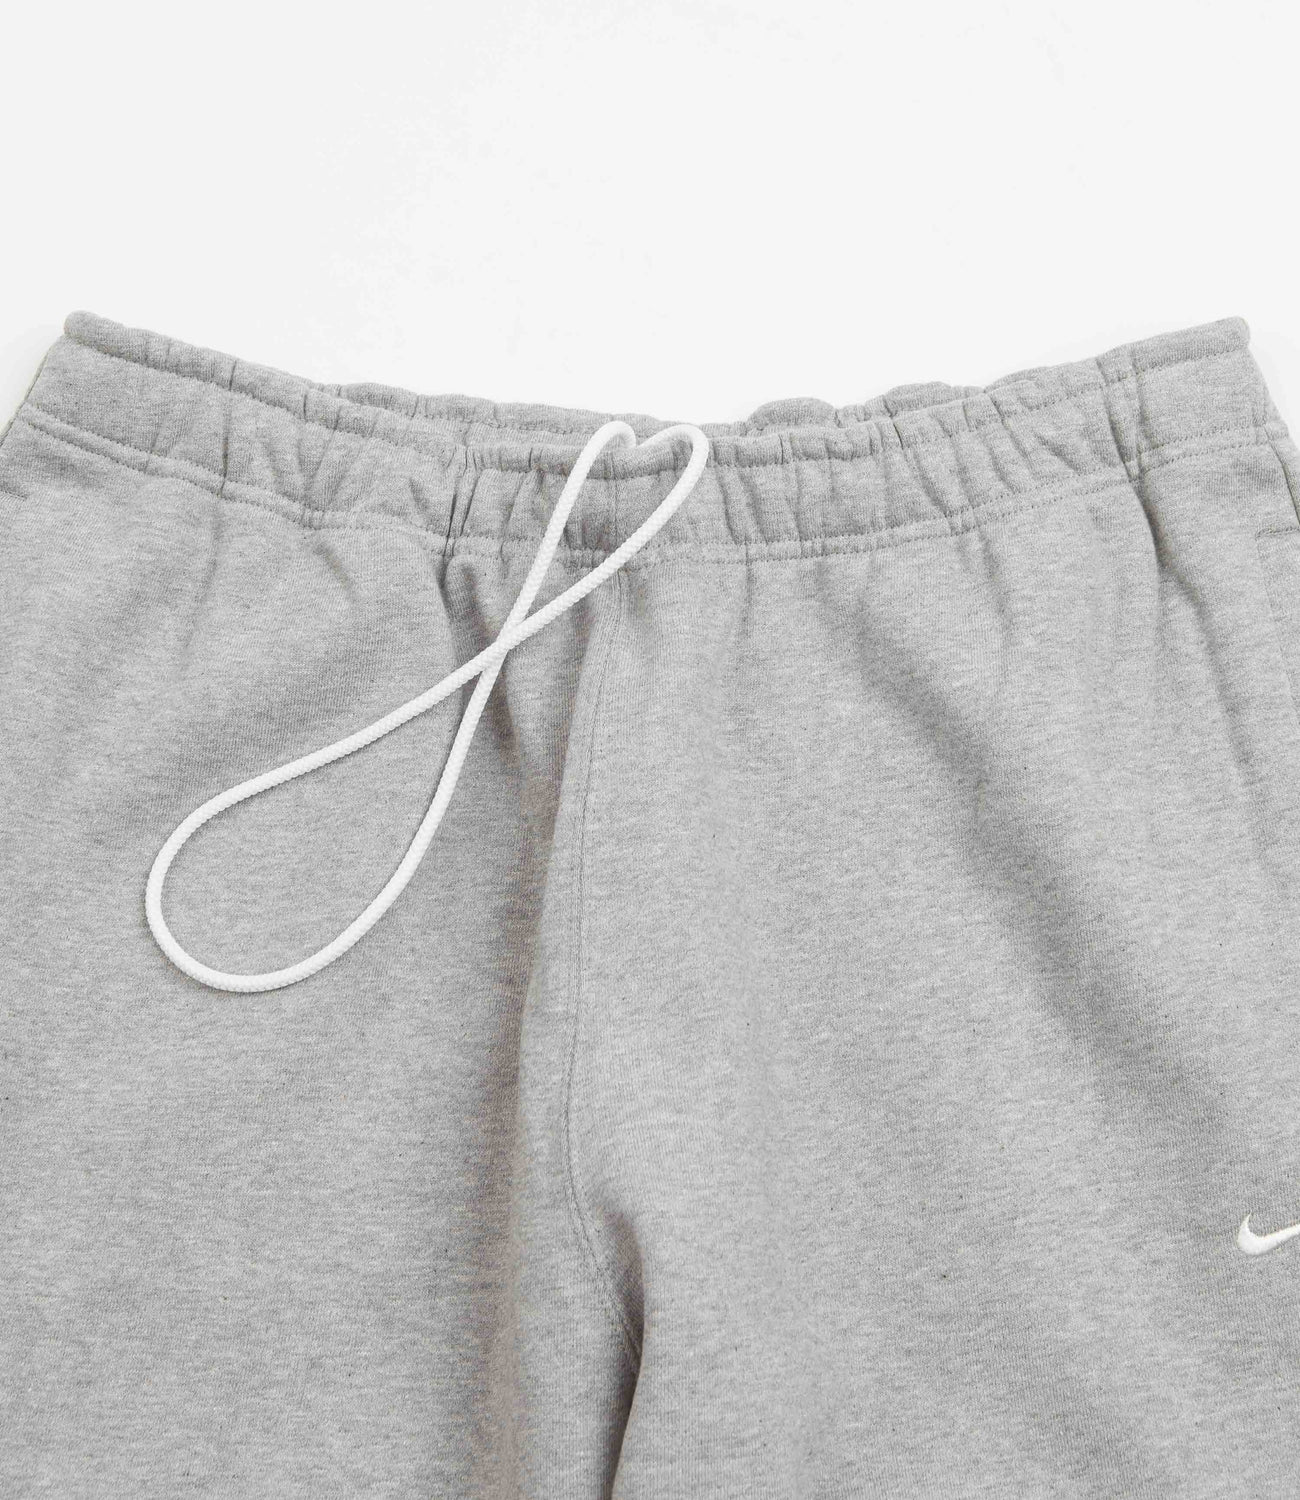 Nike Club cuffed sweatpants in white